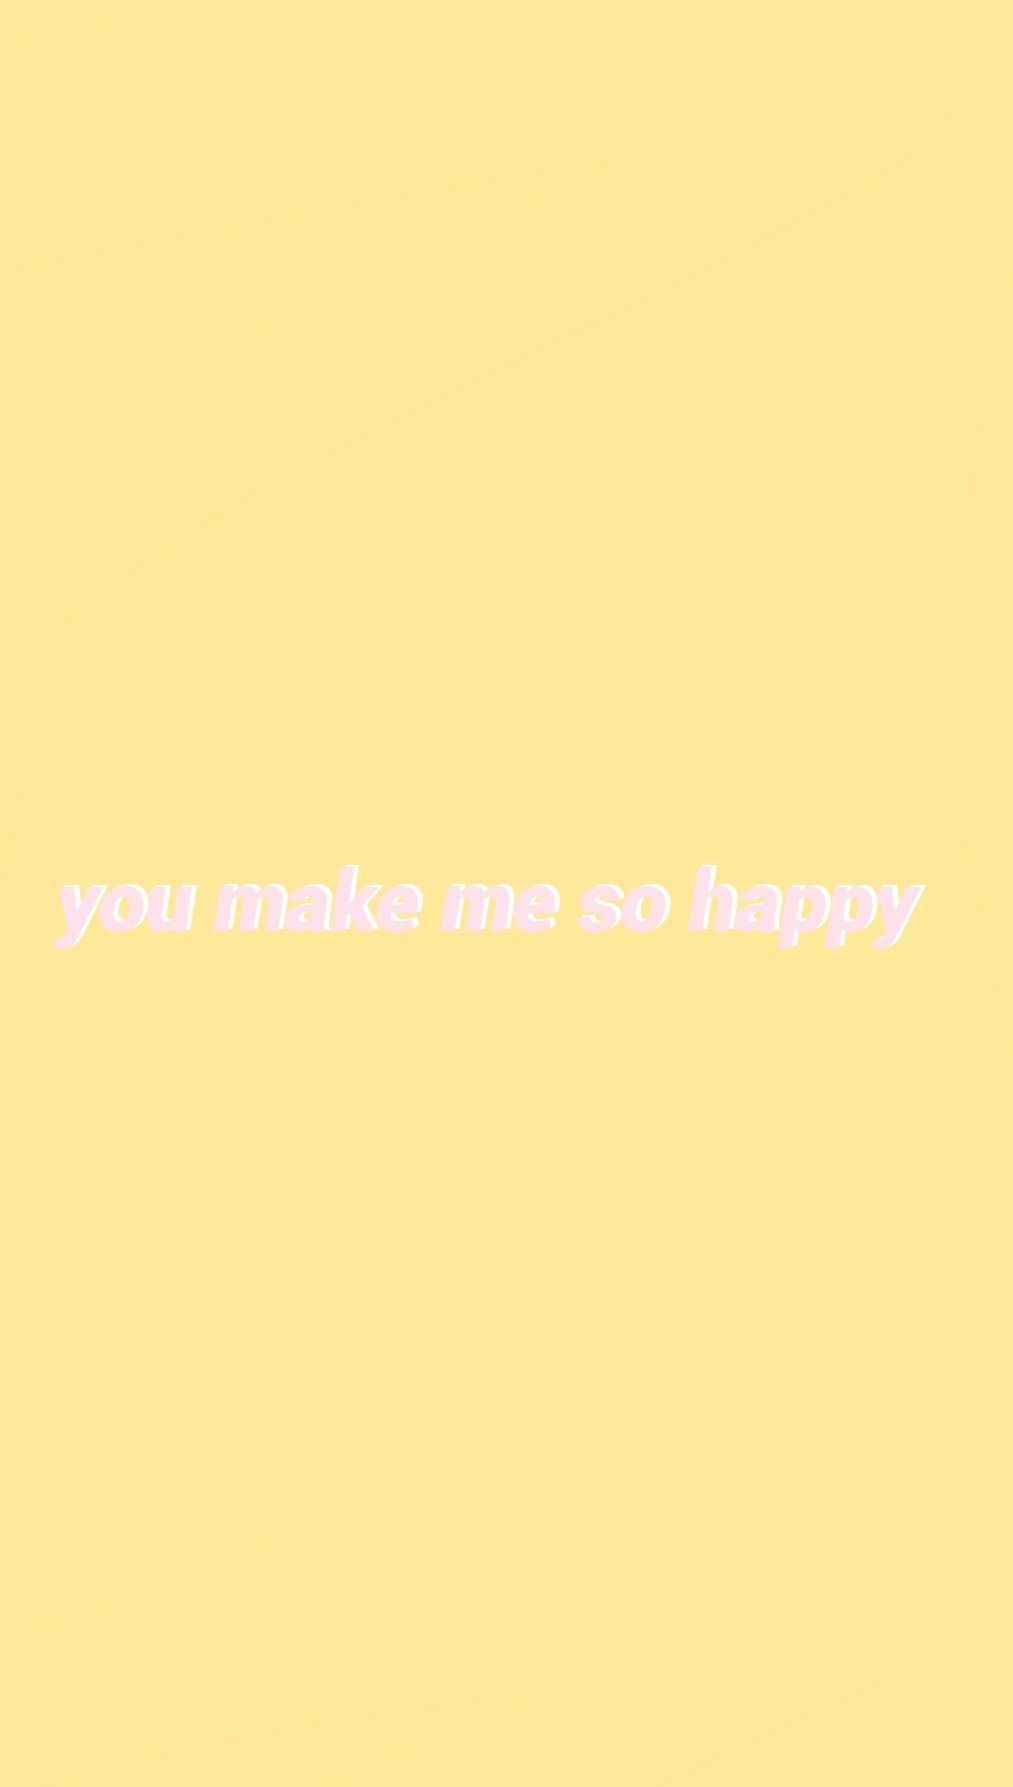 You make me so happy - Happy, positivity